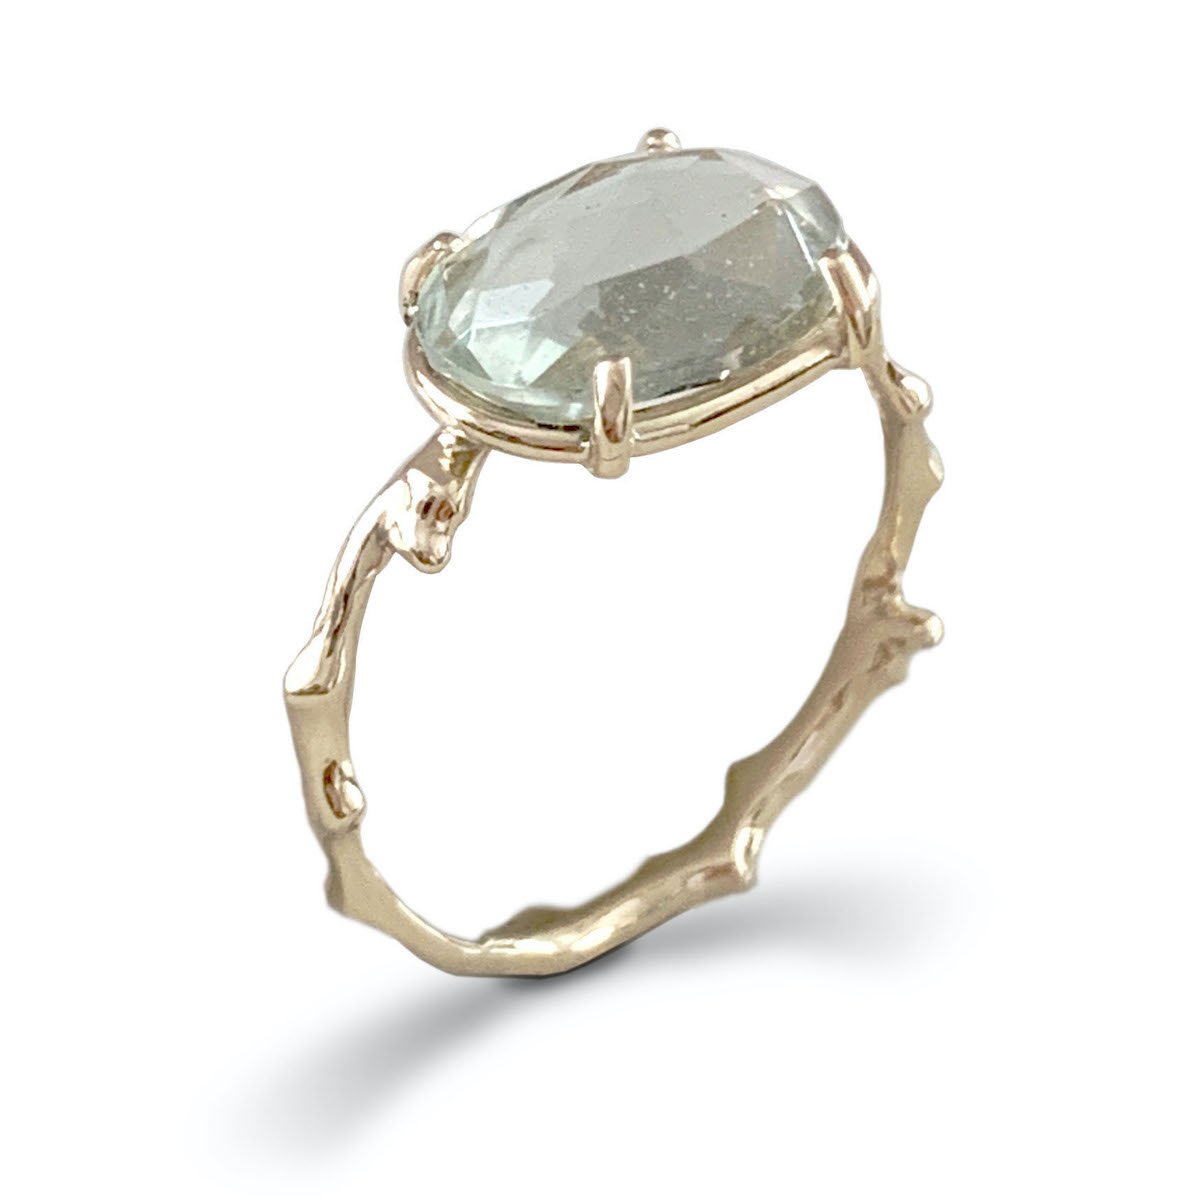 Brandts Jewellery cherry twig ring with rose cut green amethyst - Ayshe Brandts.jpg